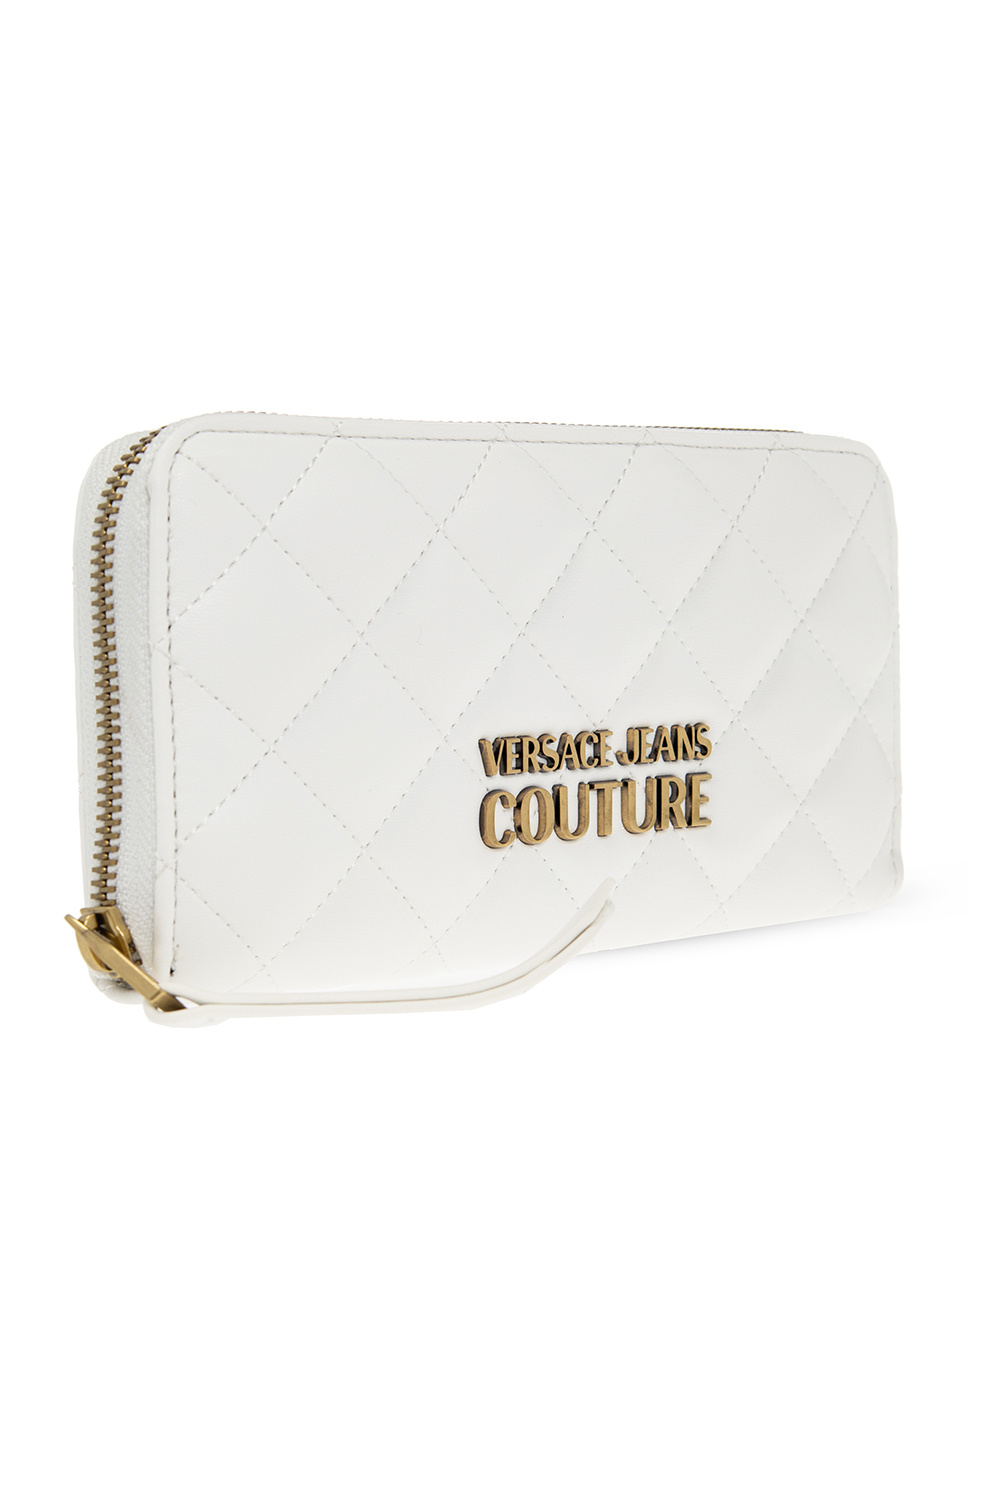 Versace Jeans Couture White Falcon paisley maxi dress